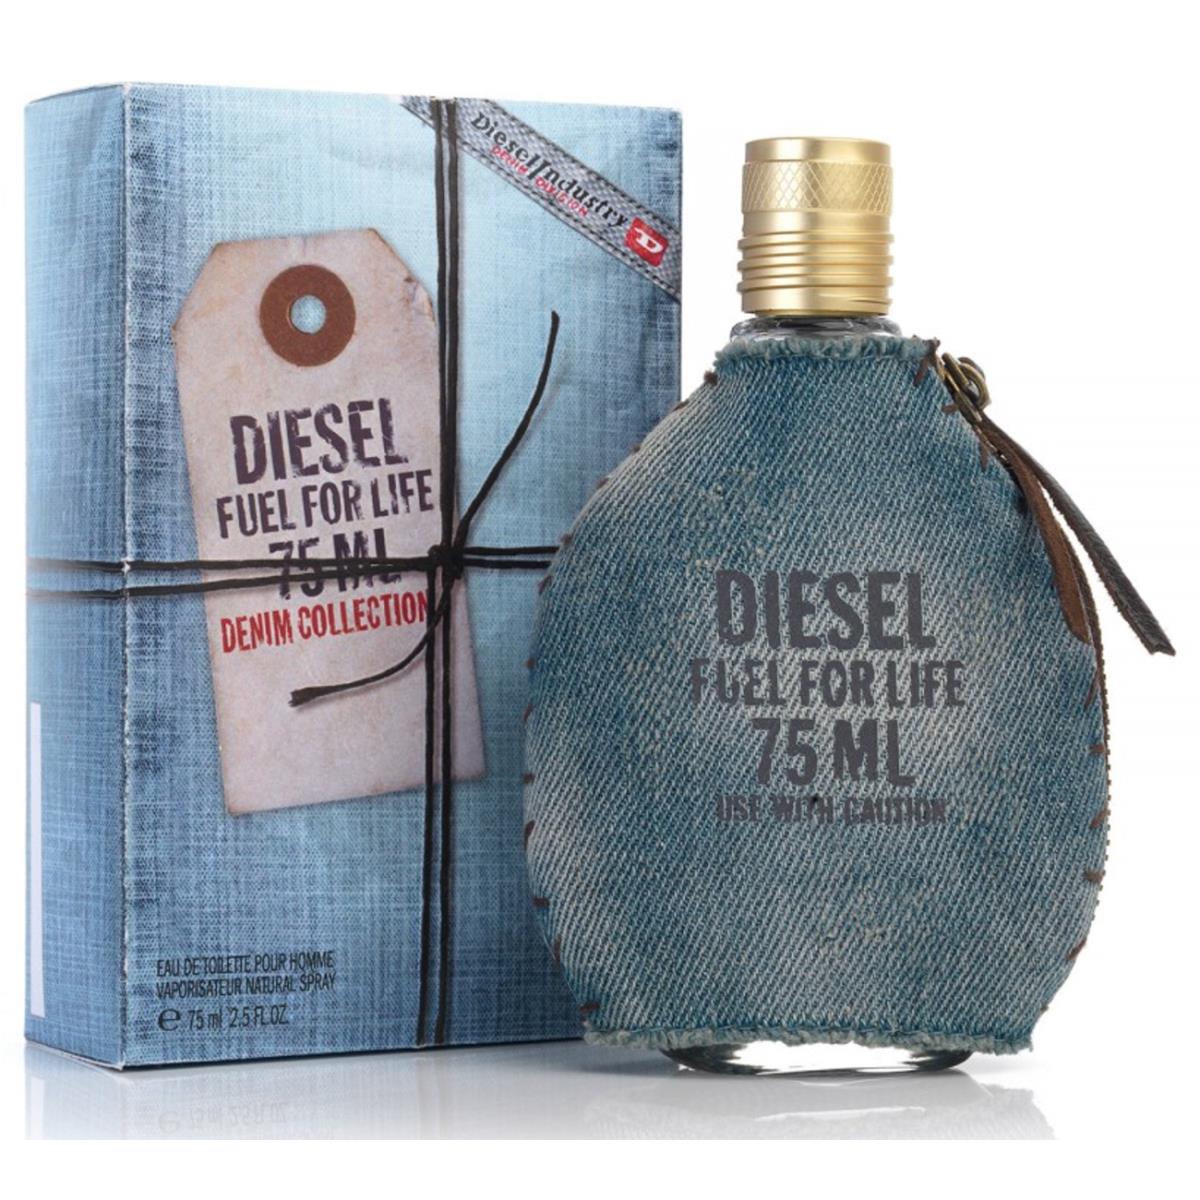 Diesel Fuel For Life Men Denim Collection 75ml-2.5oz Edt Spr - BR16